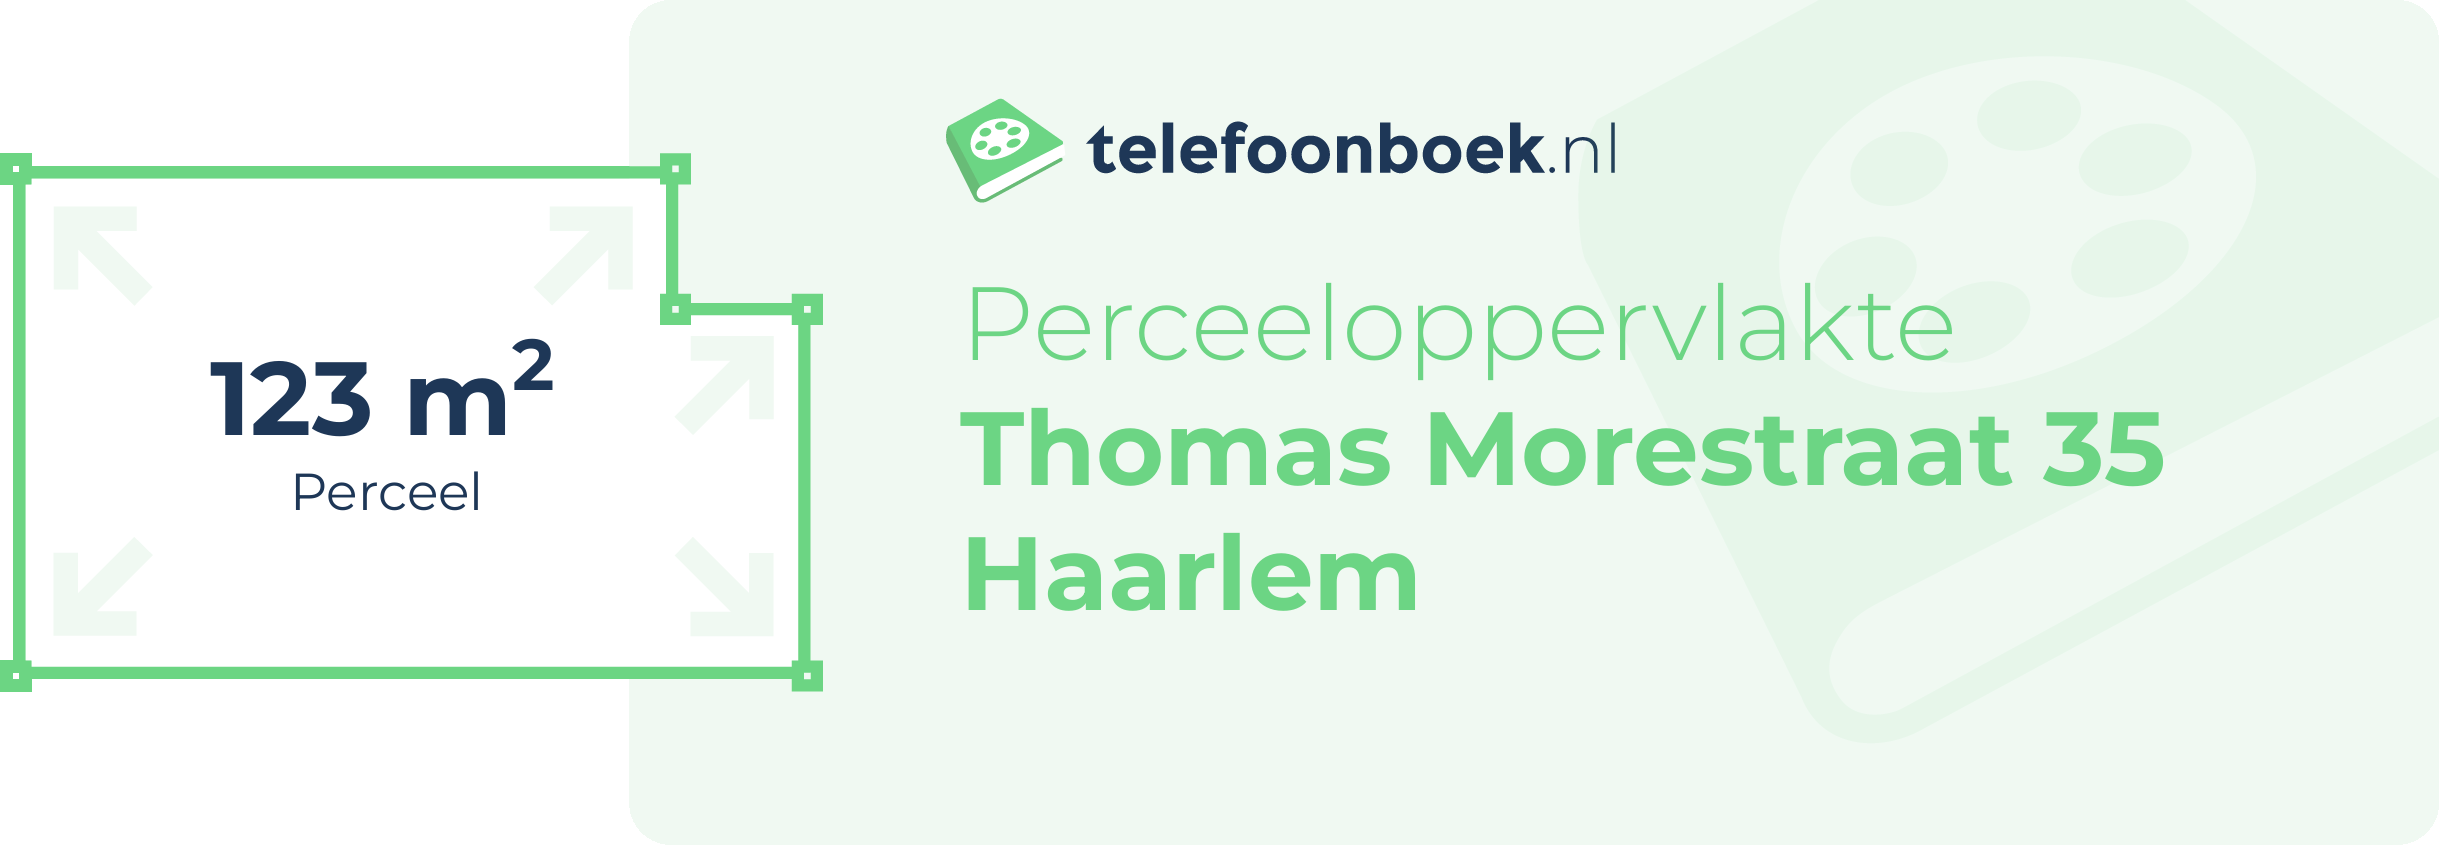 Perceeloppervlakte Thomas Morestraat 35 Haarlem